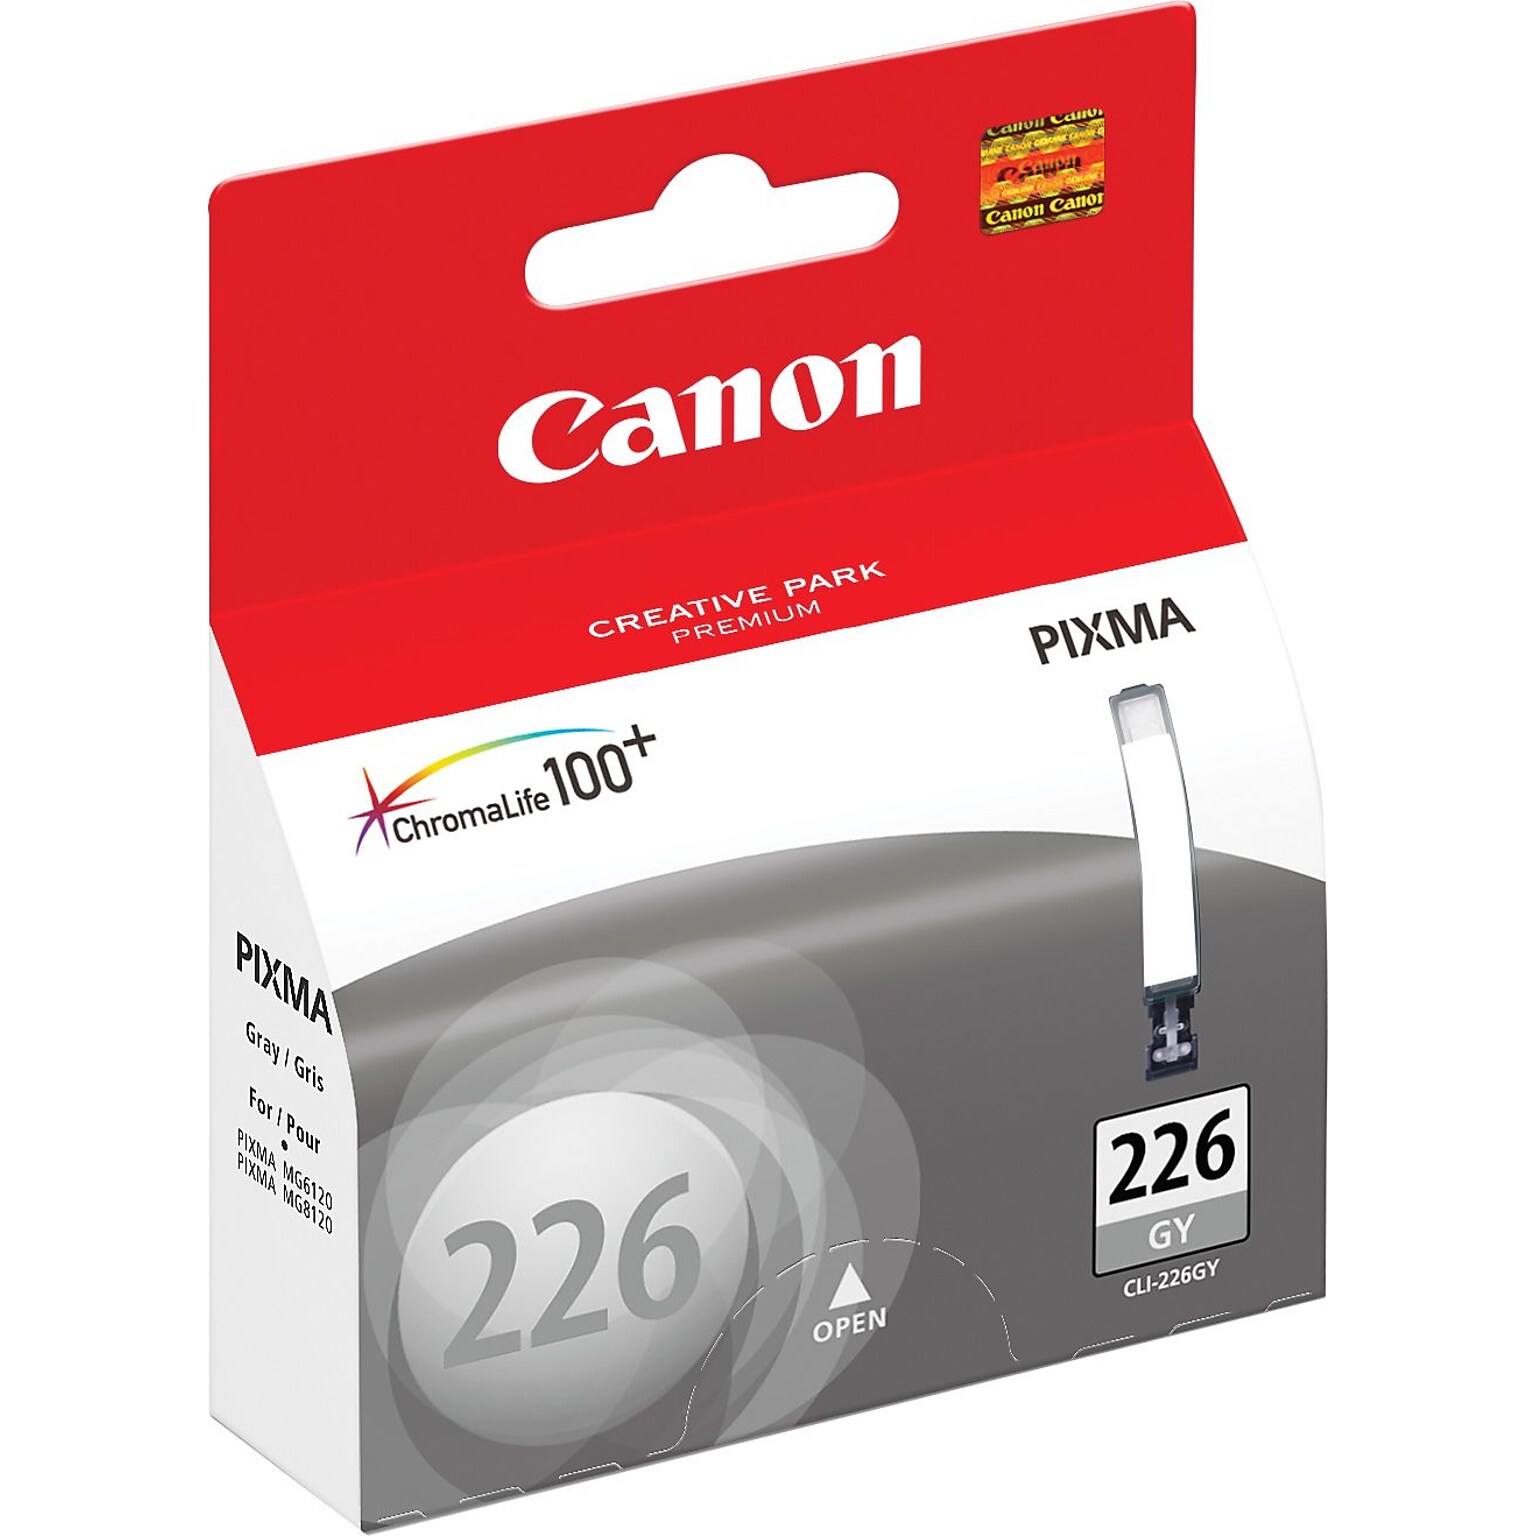 Canon 226 Gray Standard Yield Ink Cartridge   (4550B001)